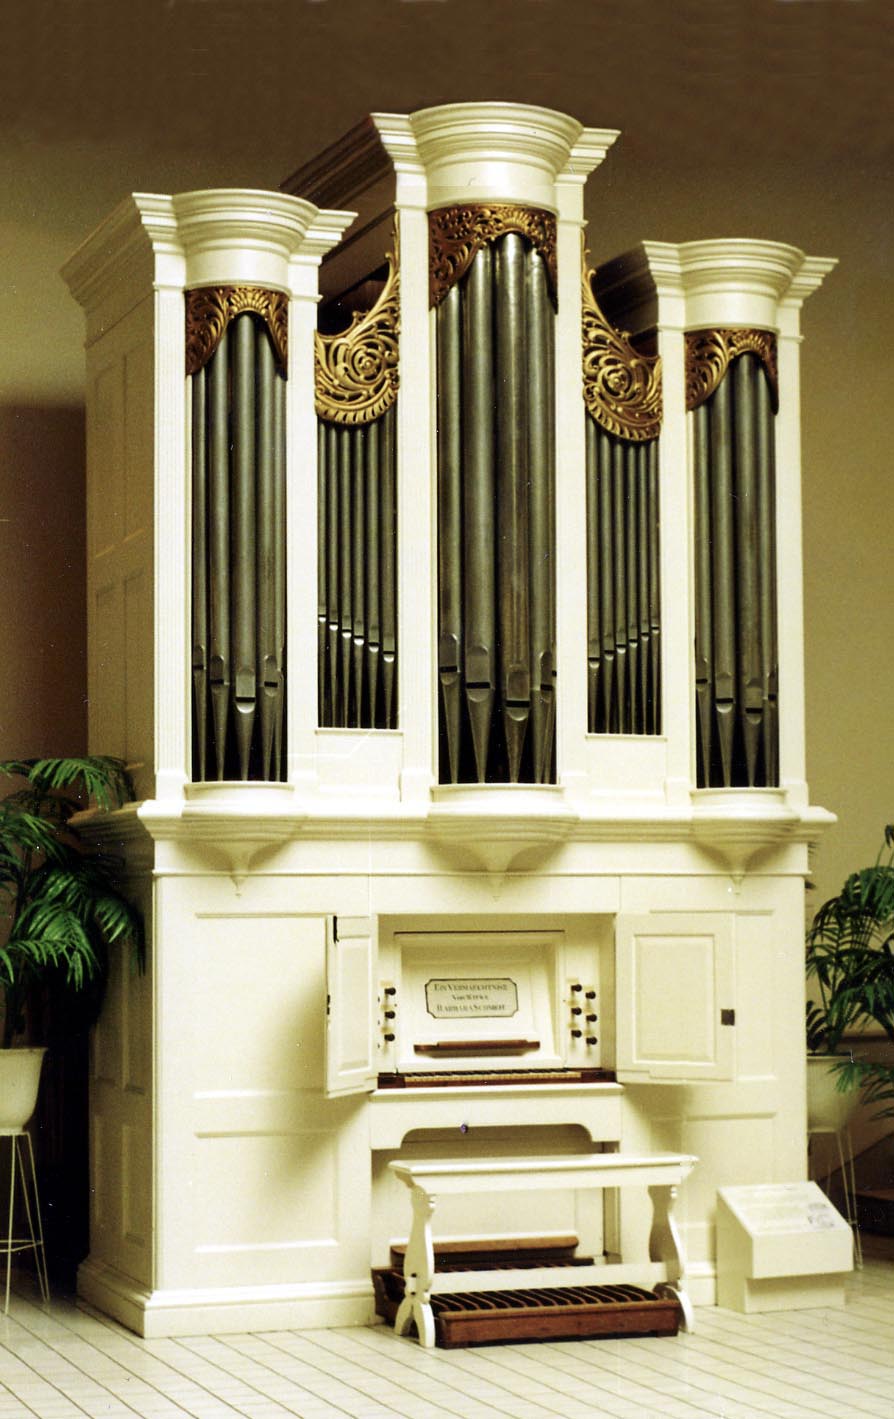 Lehigh Valley History: Tannenberg, First American Organ Builder